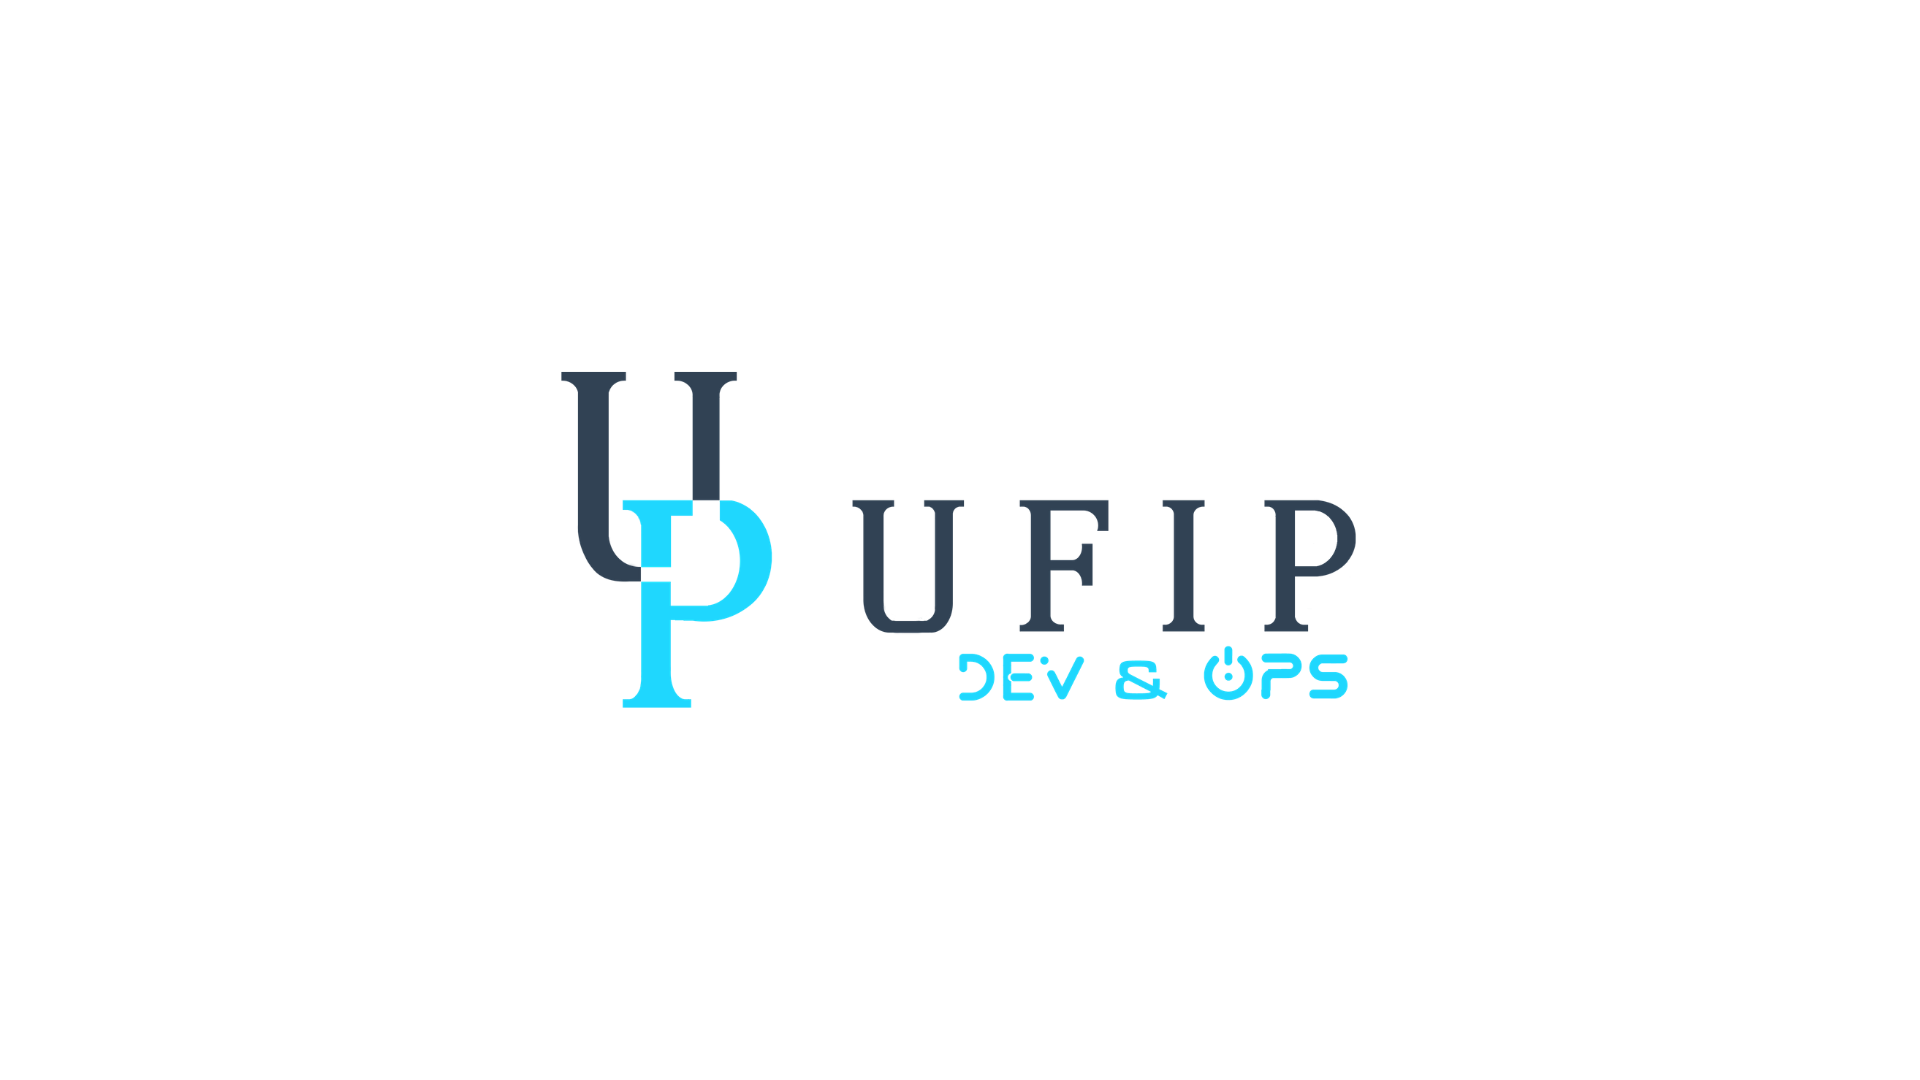 UFIP Dev & Ops